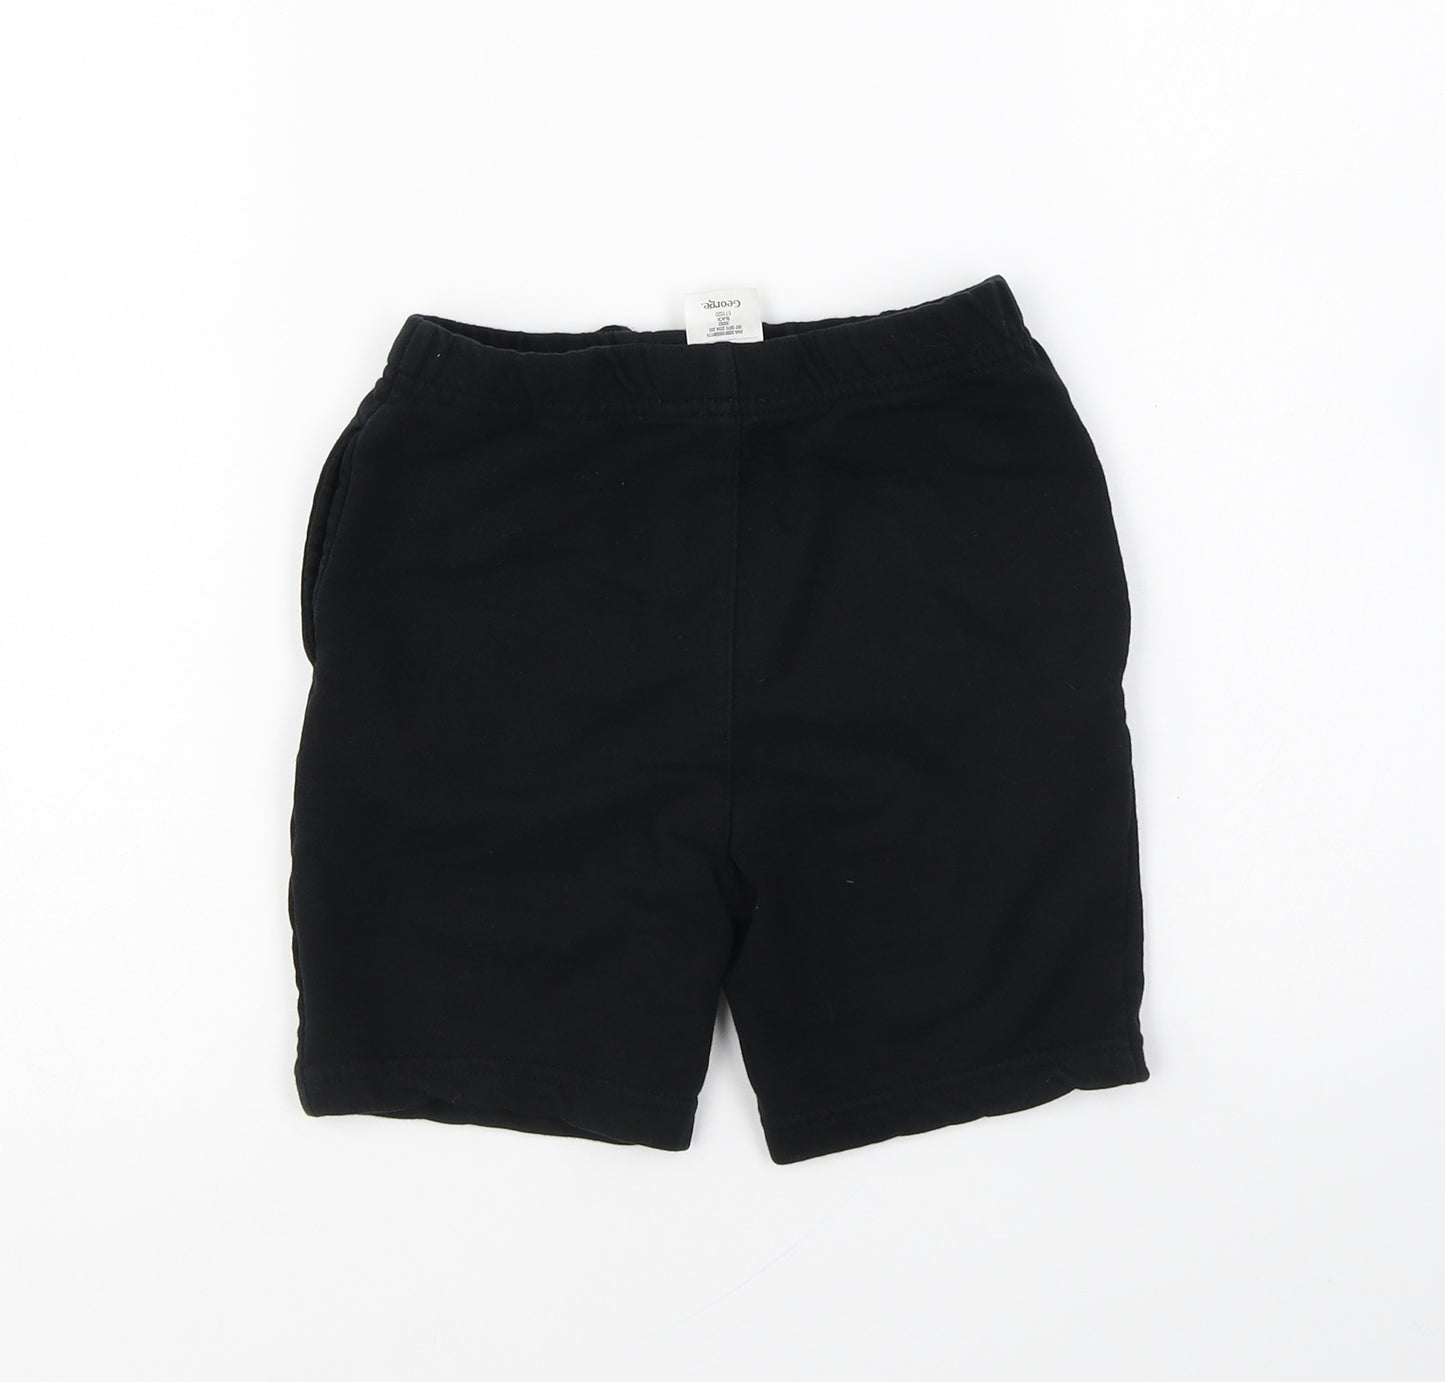 George Boys Black Cotton Sweat Shorts Size 5-6 Years Regular Drawstring